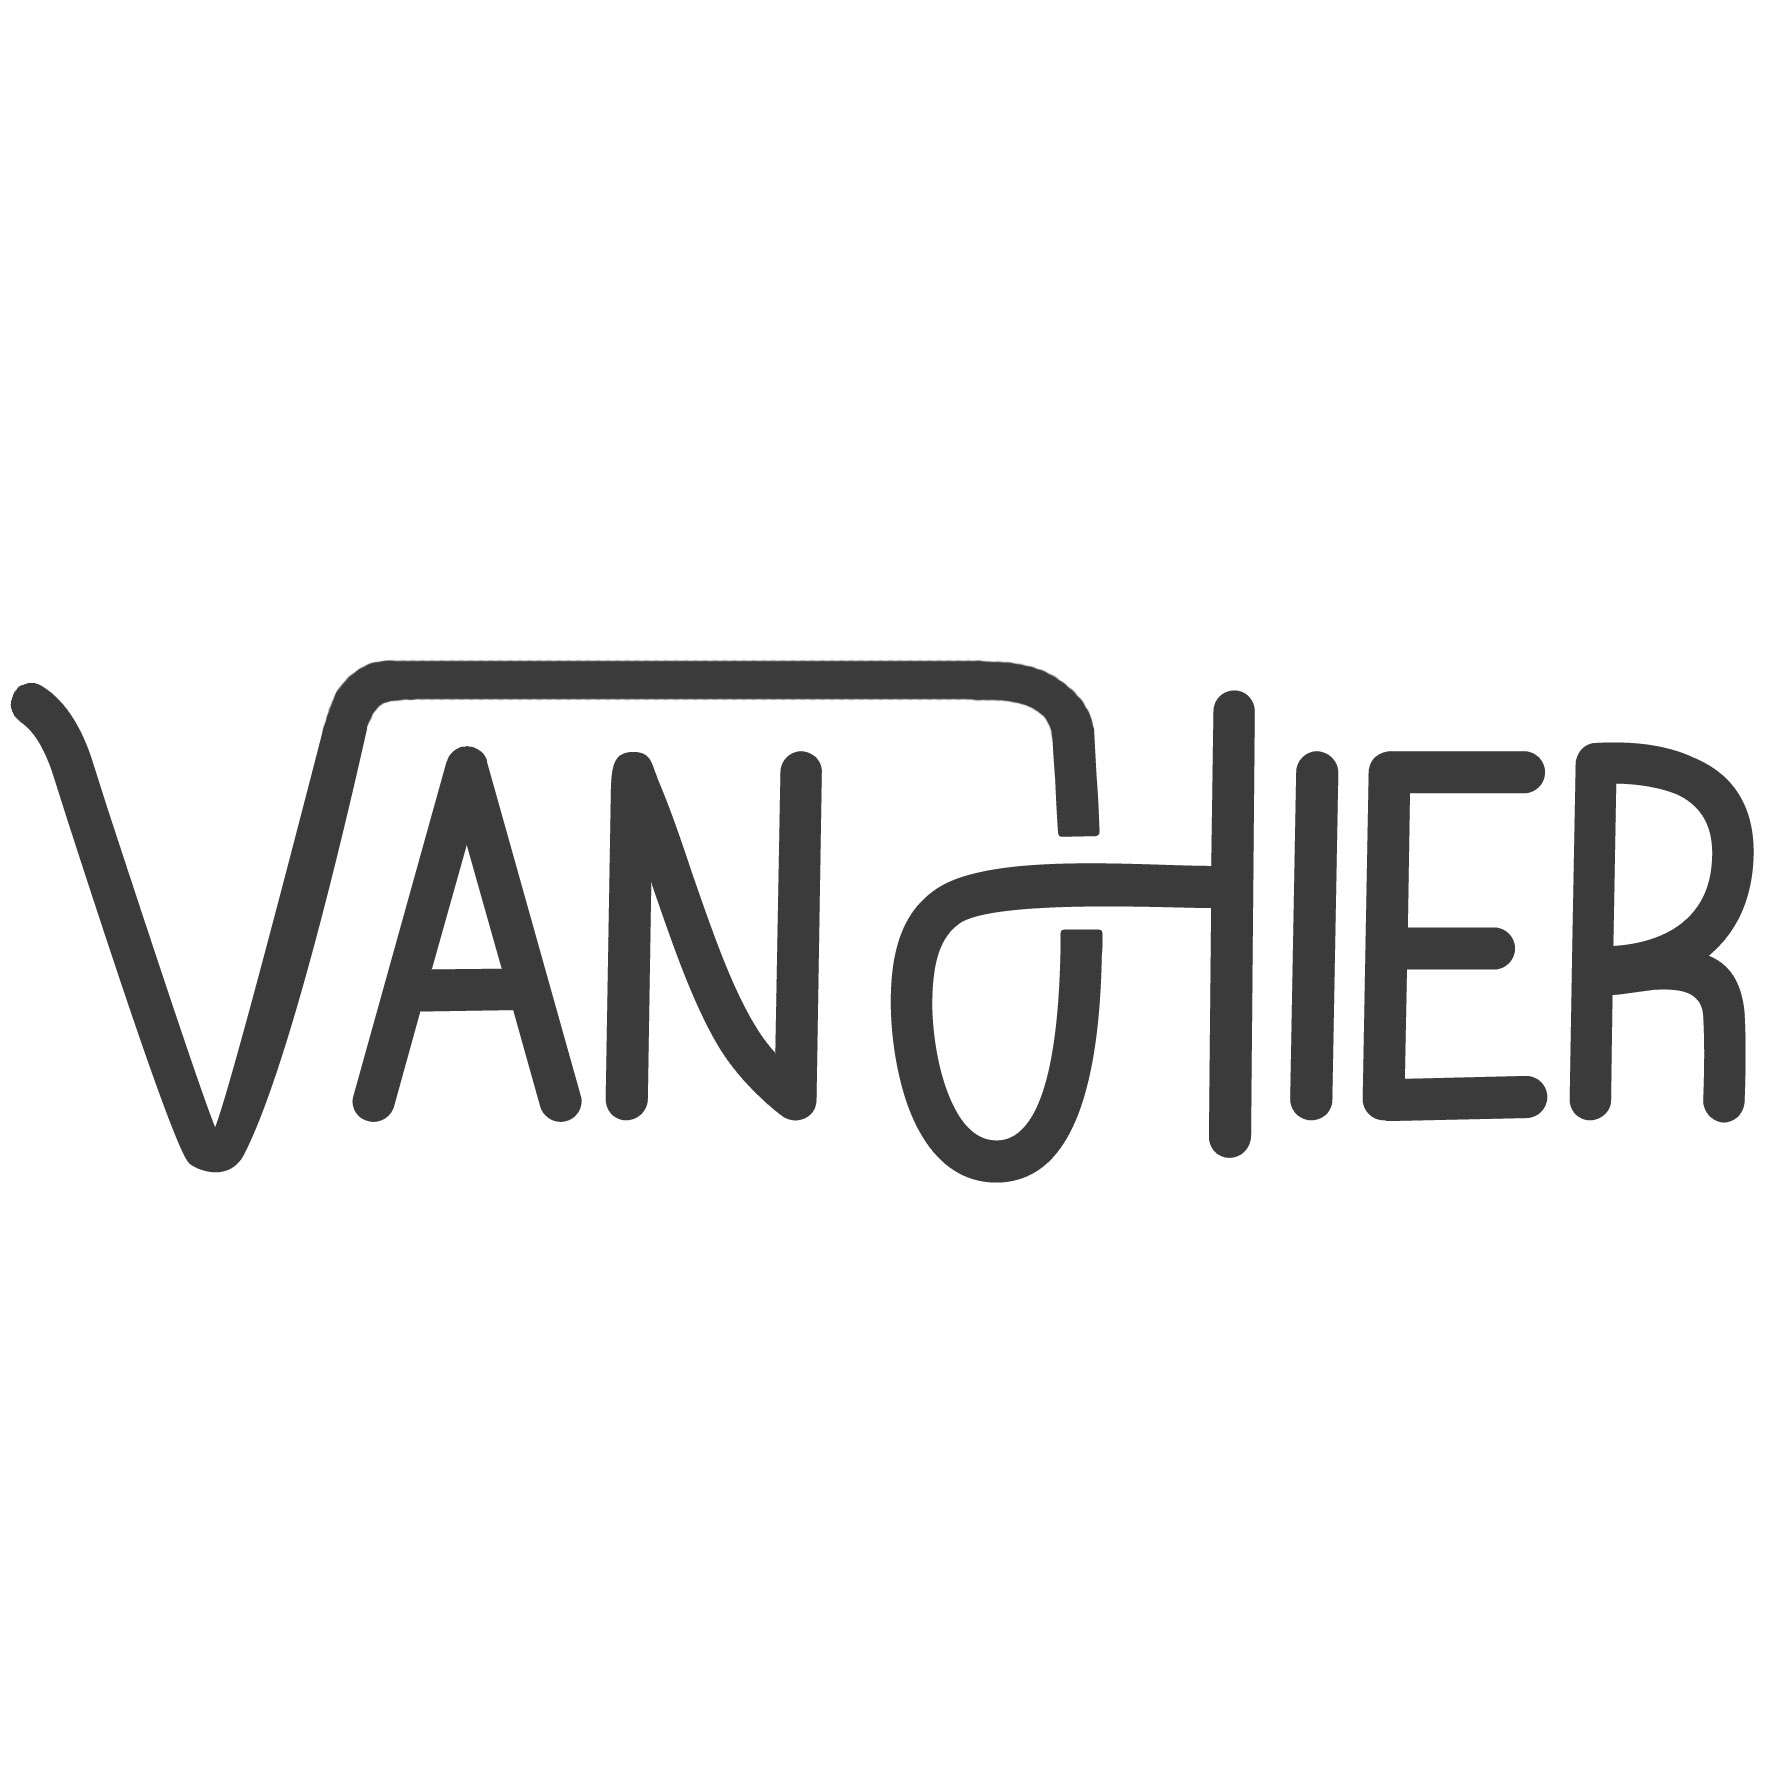 VanHier